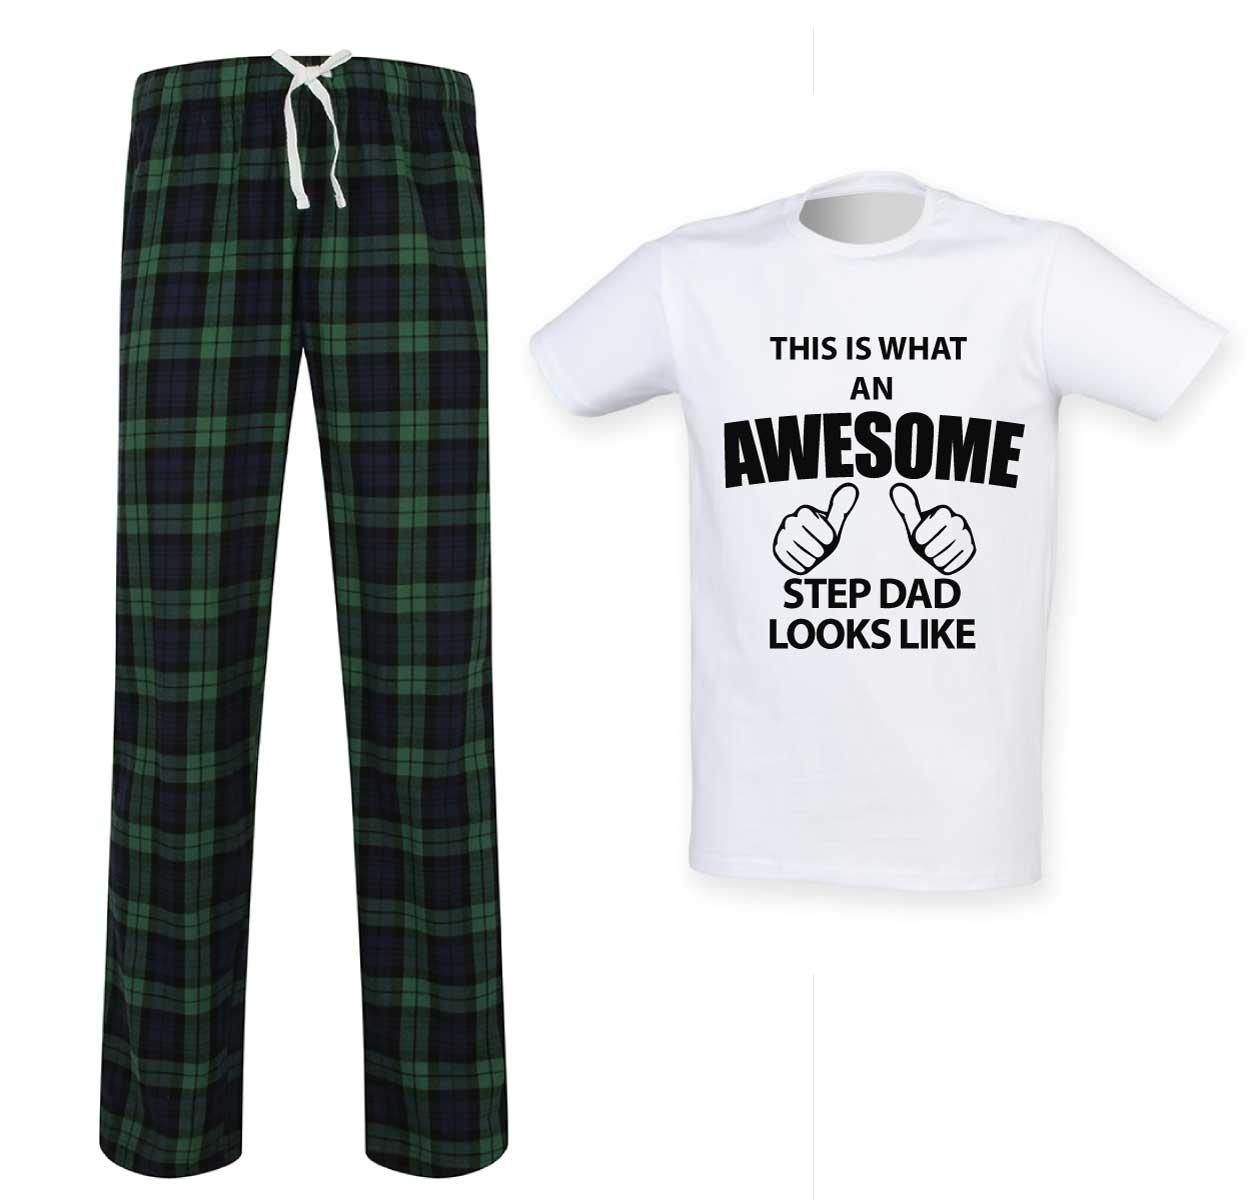 This Is What An Awesome Step Dad Looks Like Tartan Pyjamas PJ's Lounge Pants